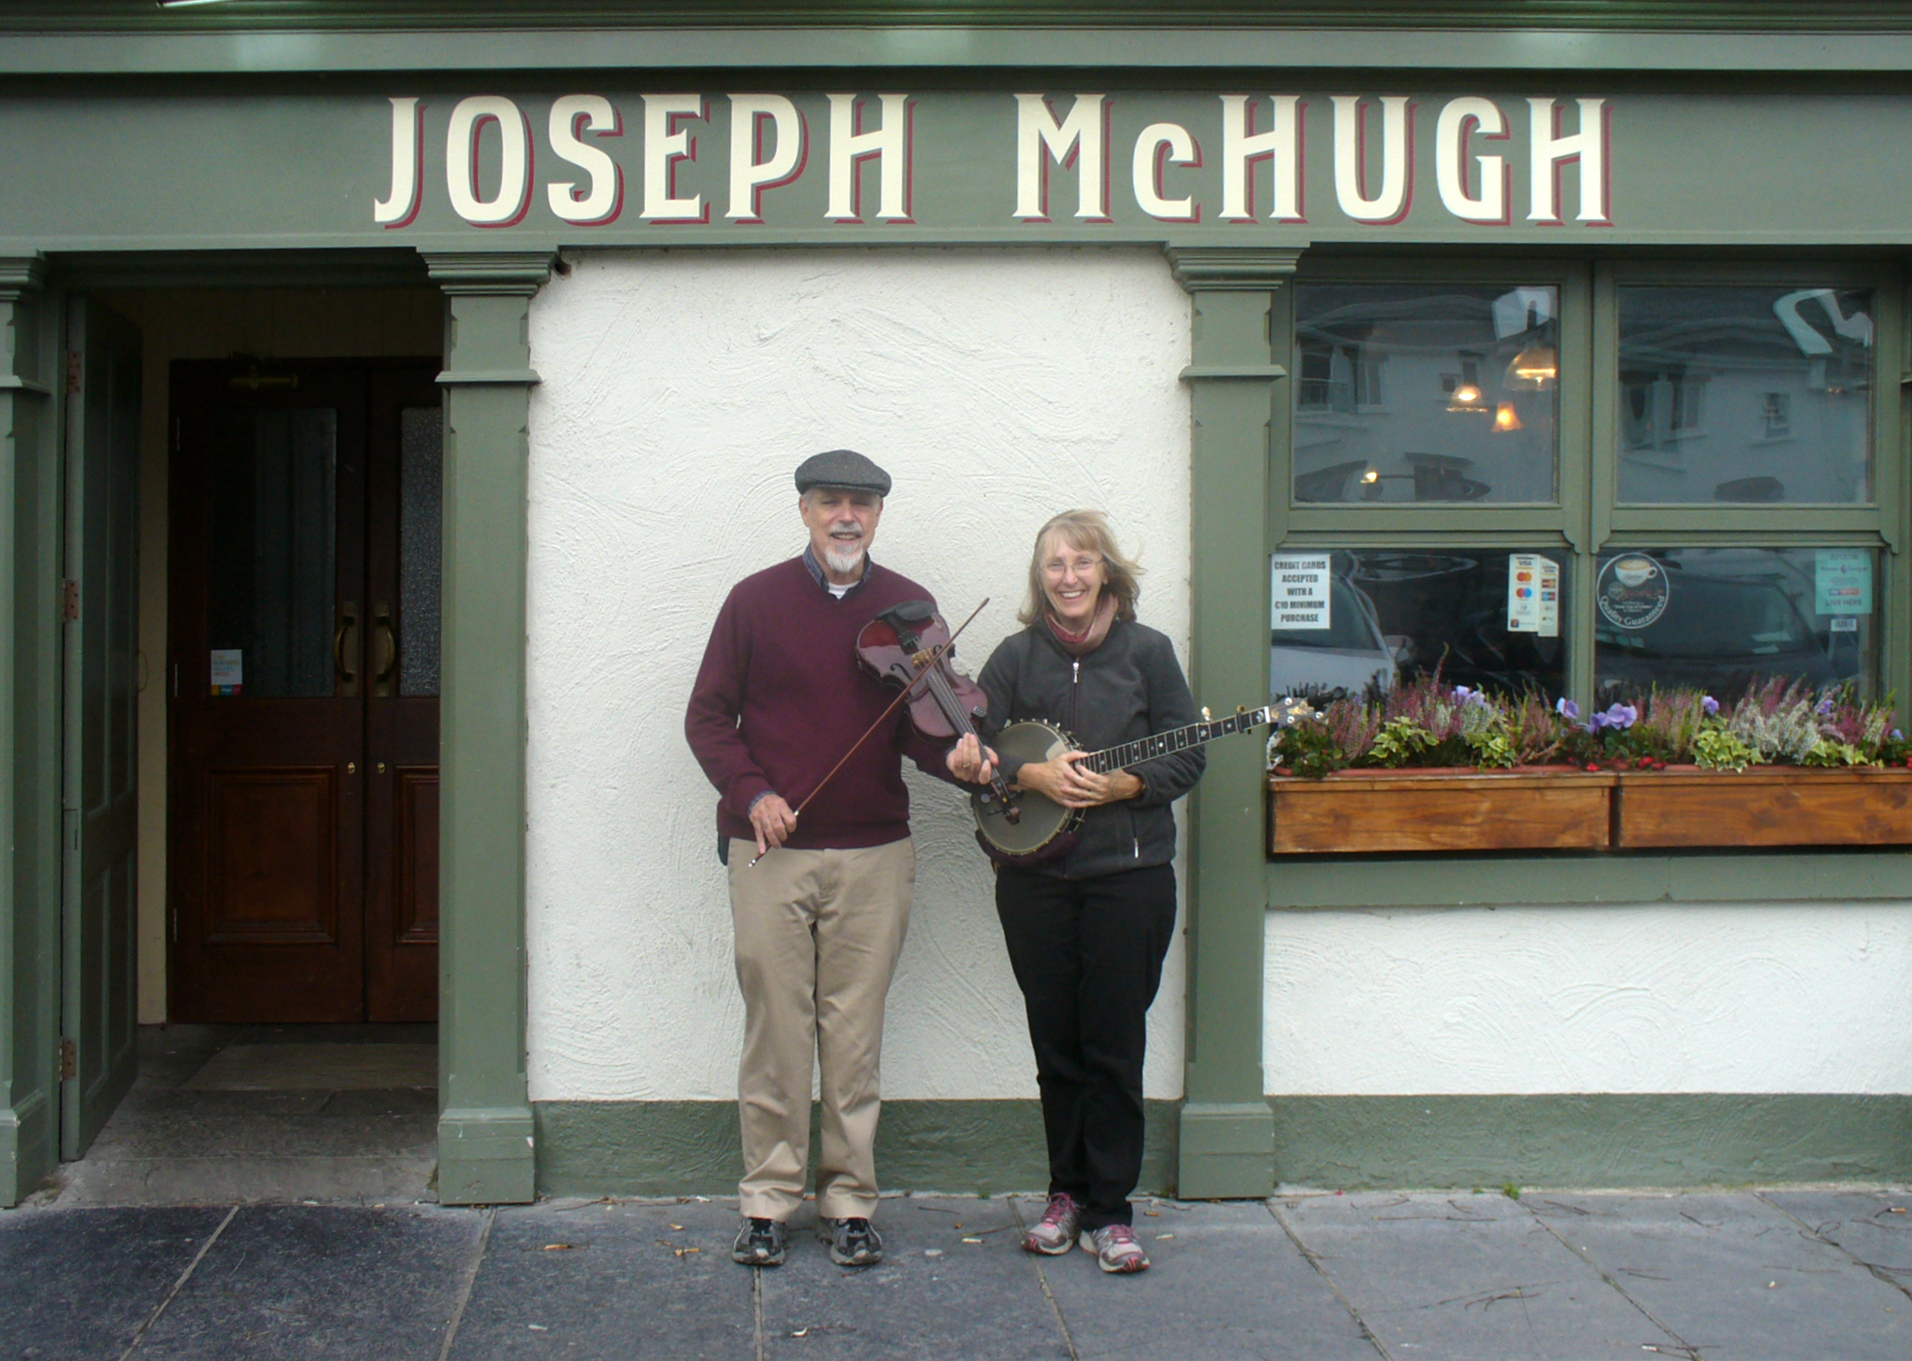 Joe and Paula McHugh in front of Joseph McHugh Pub is Lisconnor, Ireland